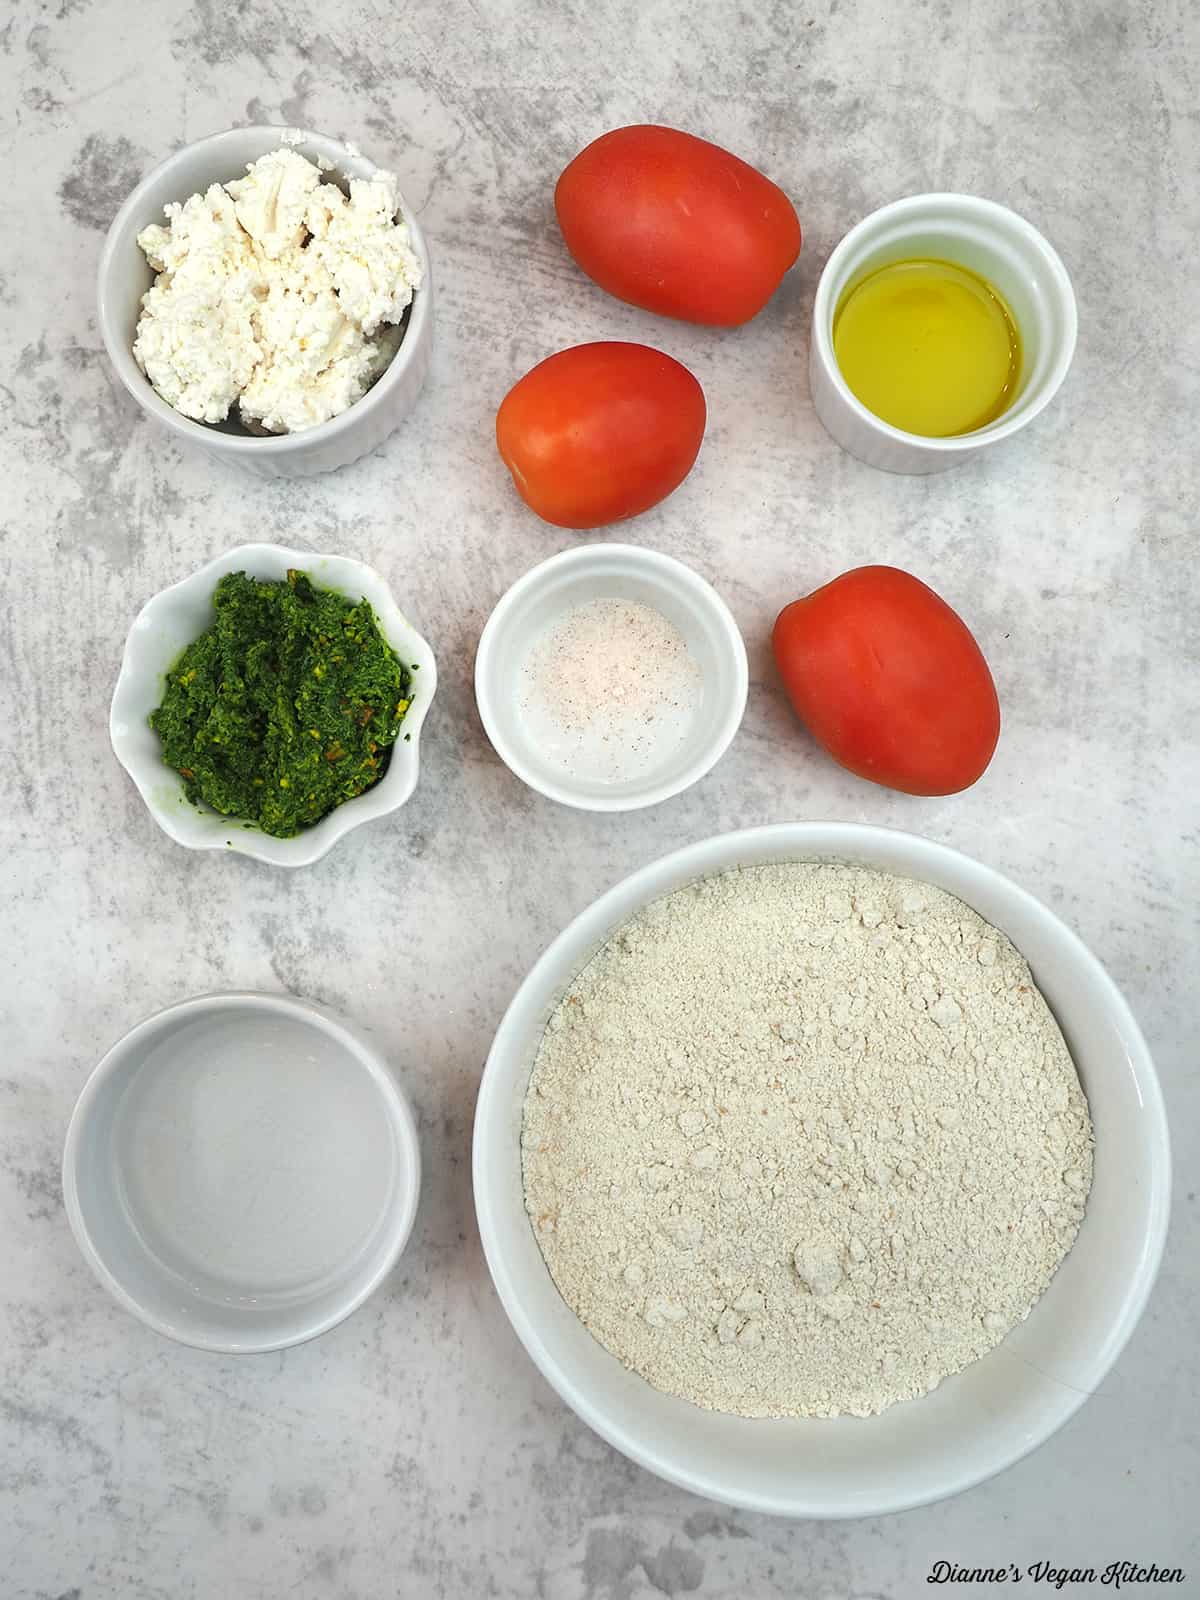 Ricotta, tomatoes, olive oil, salt, water, flour and pesto